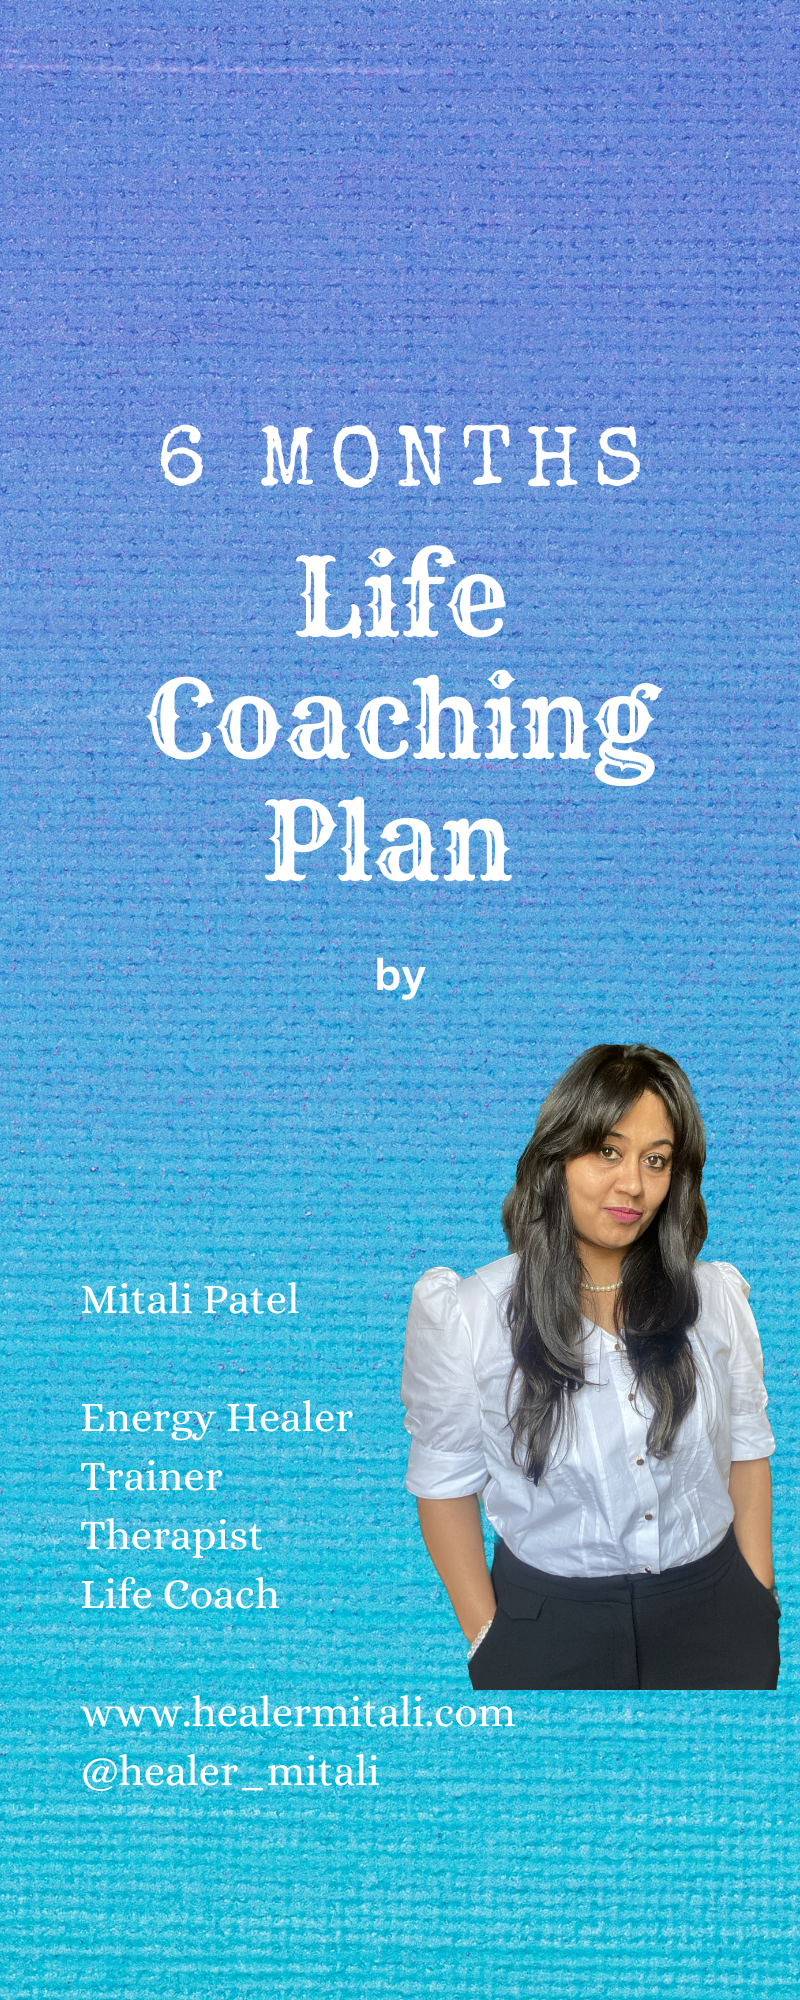 Life Coaching by Healer Mitali